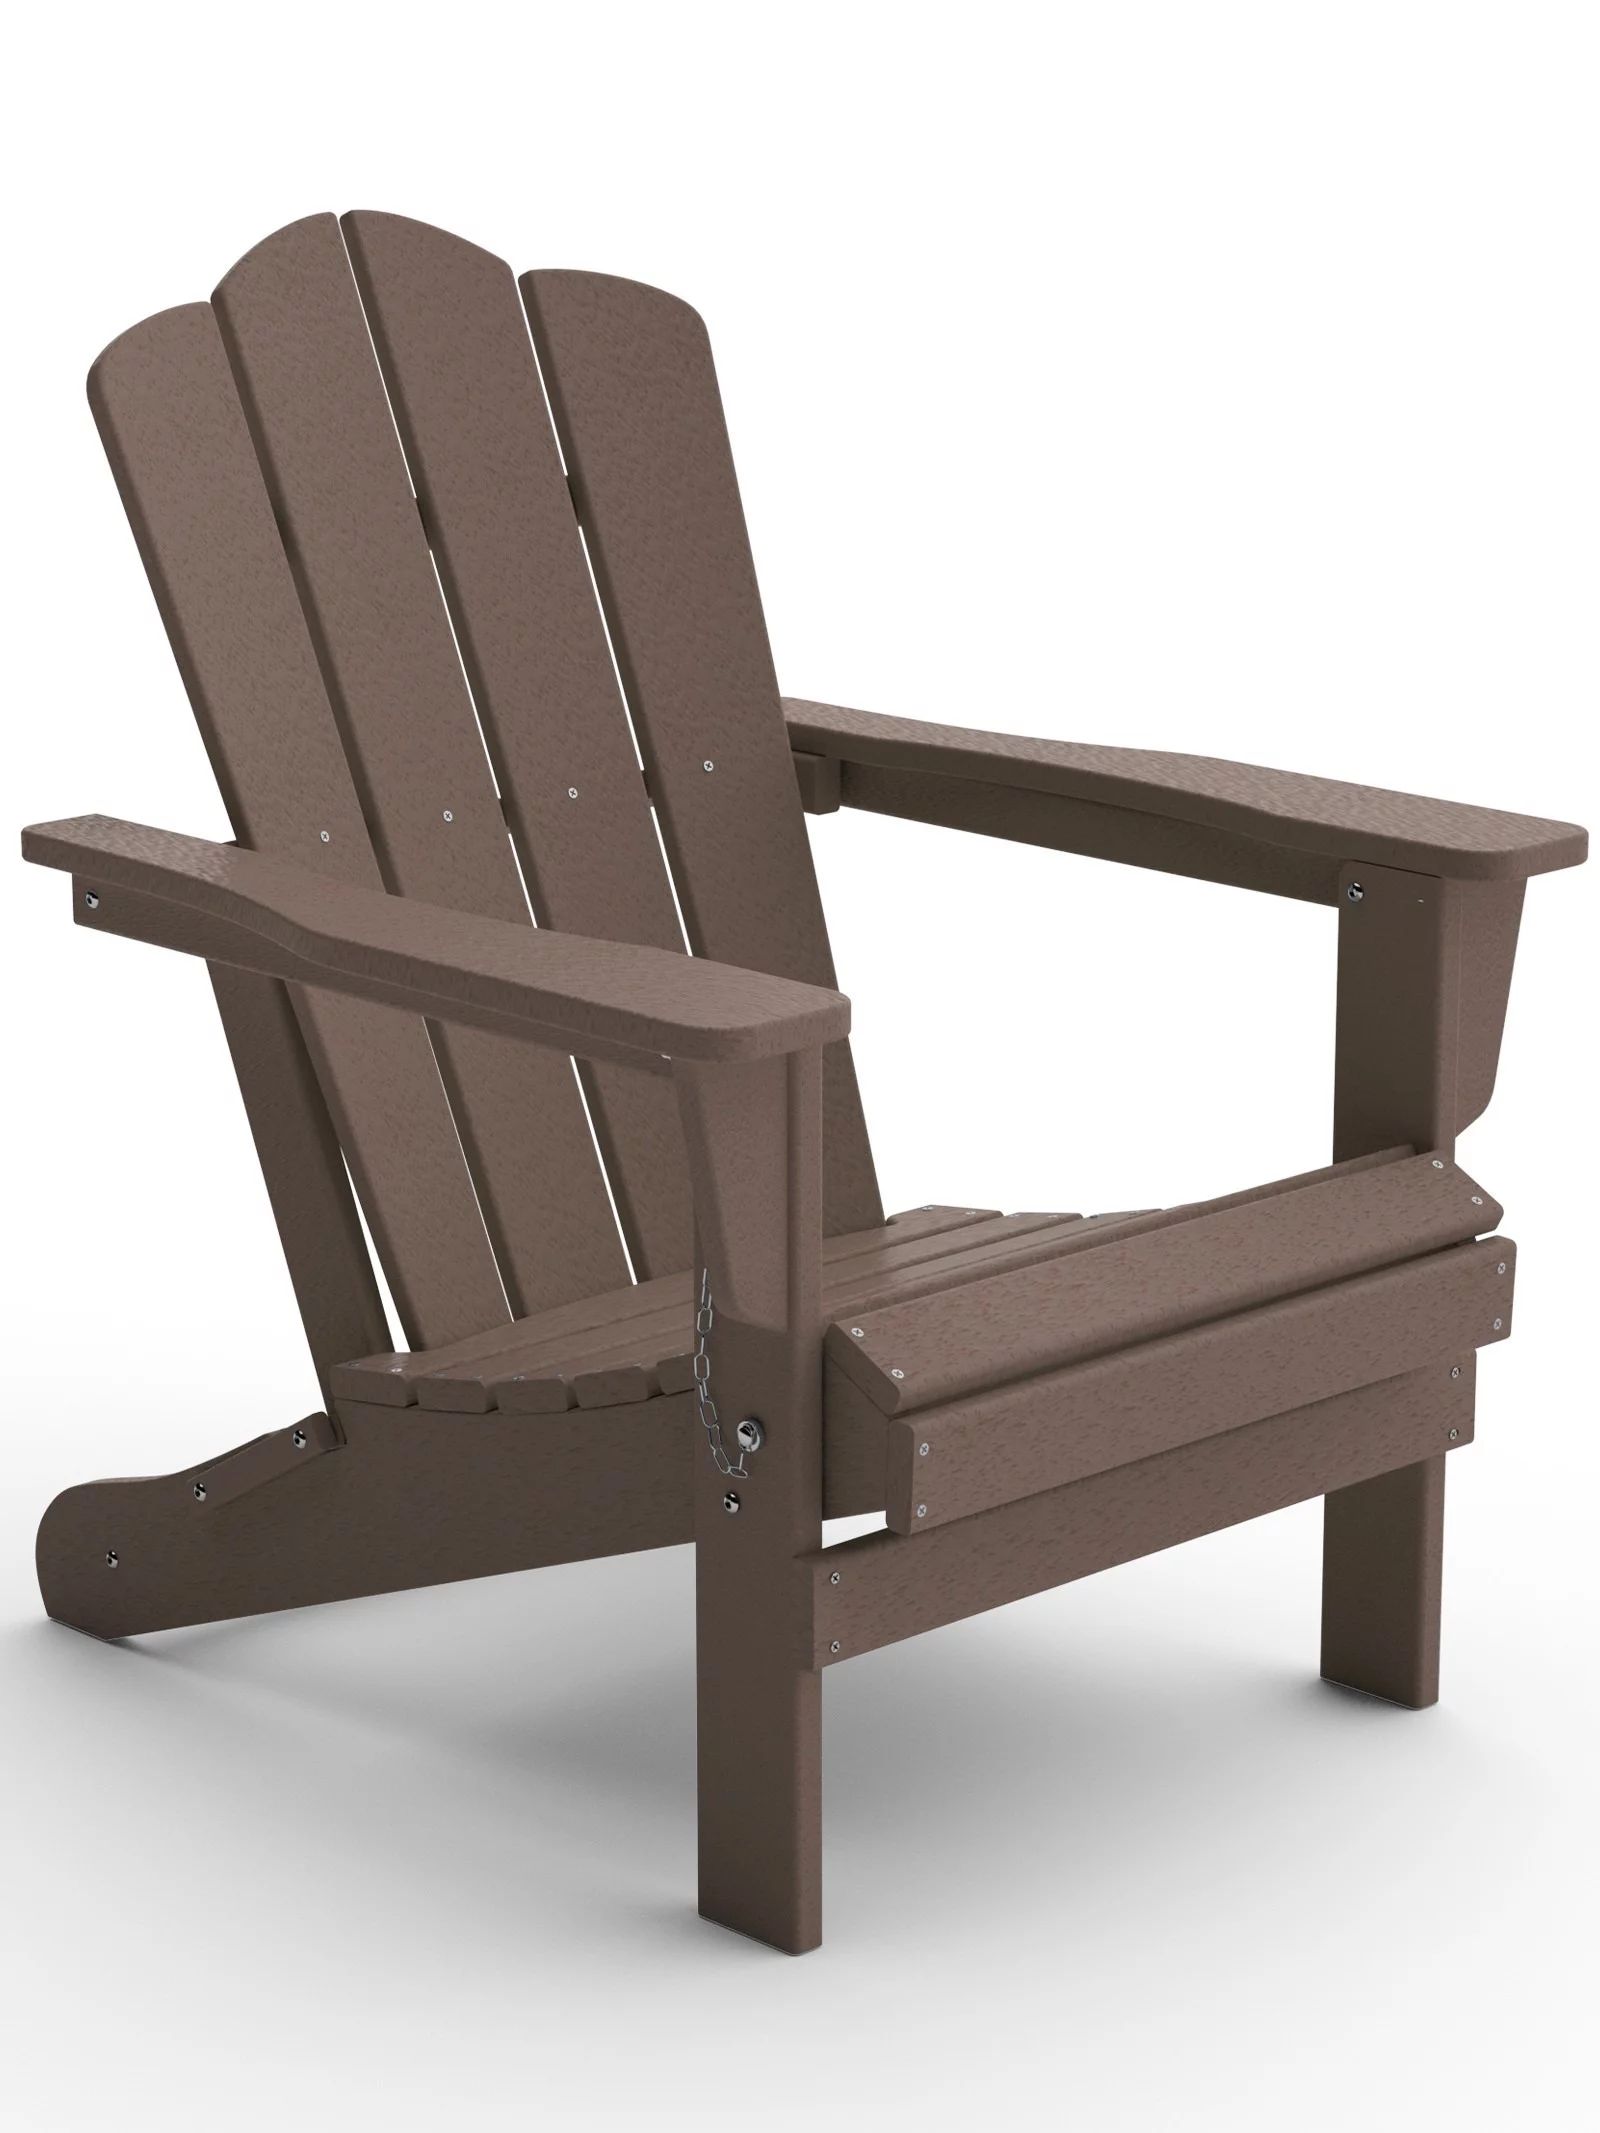 Adirondack Chair, Outdoor Folding Plastic Recycled Adirondack Chair, Brown | Walmart (US)